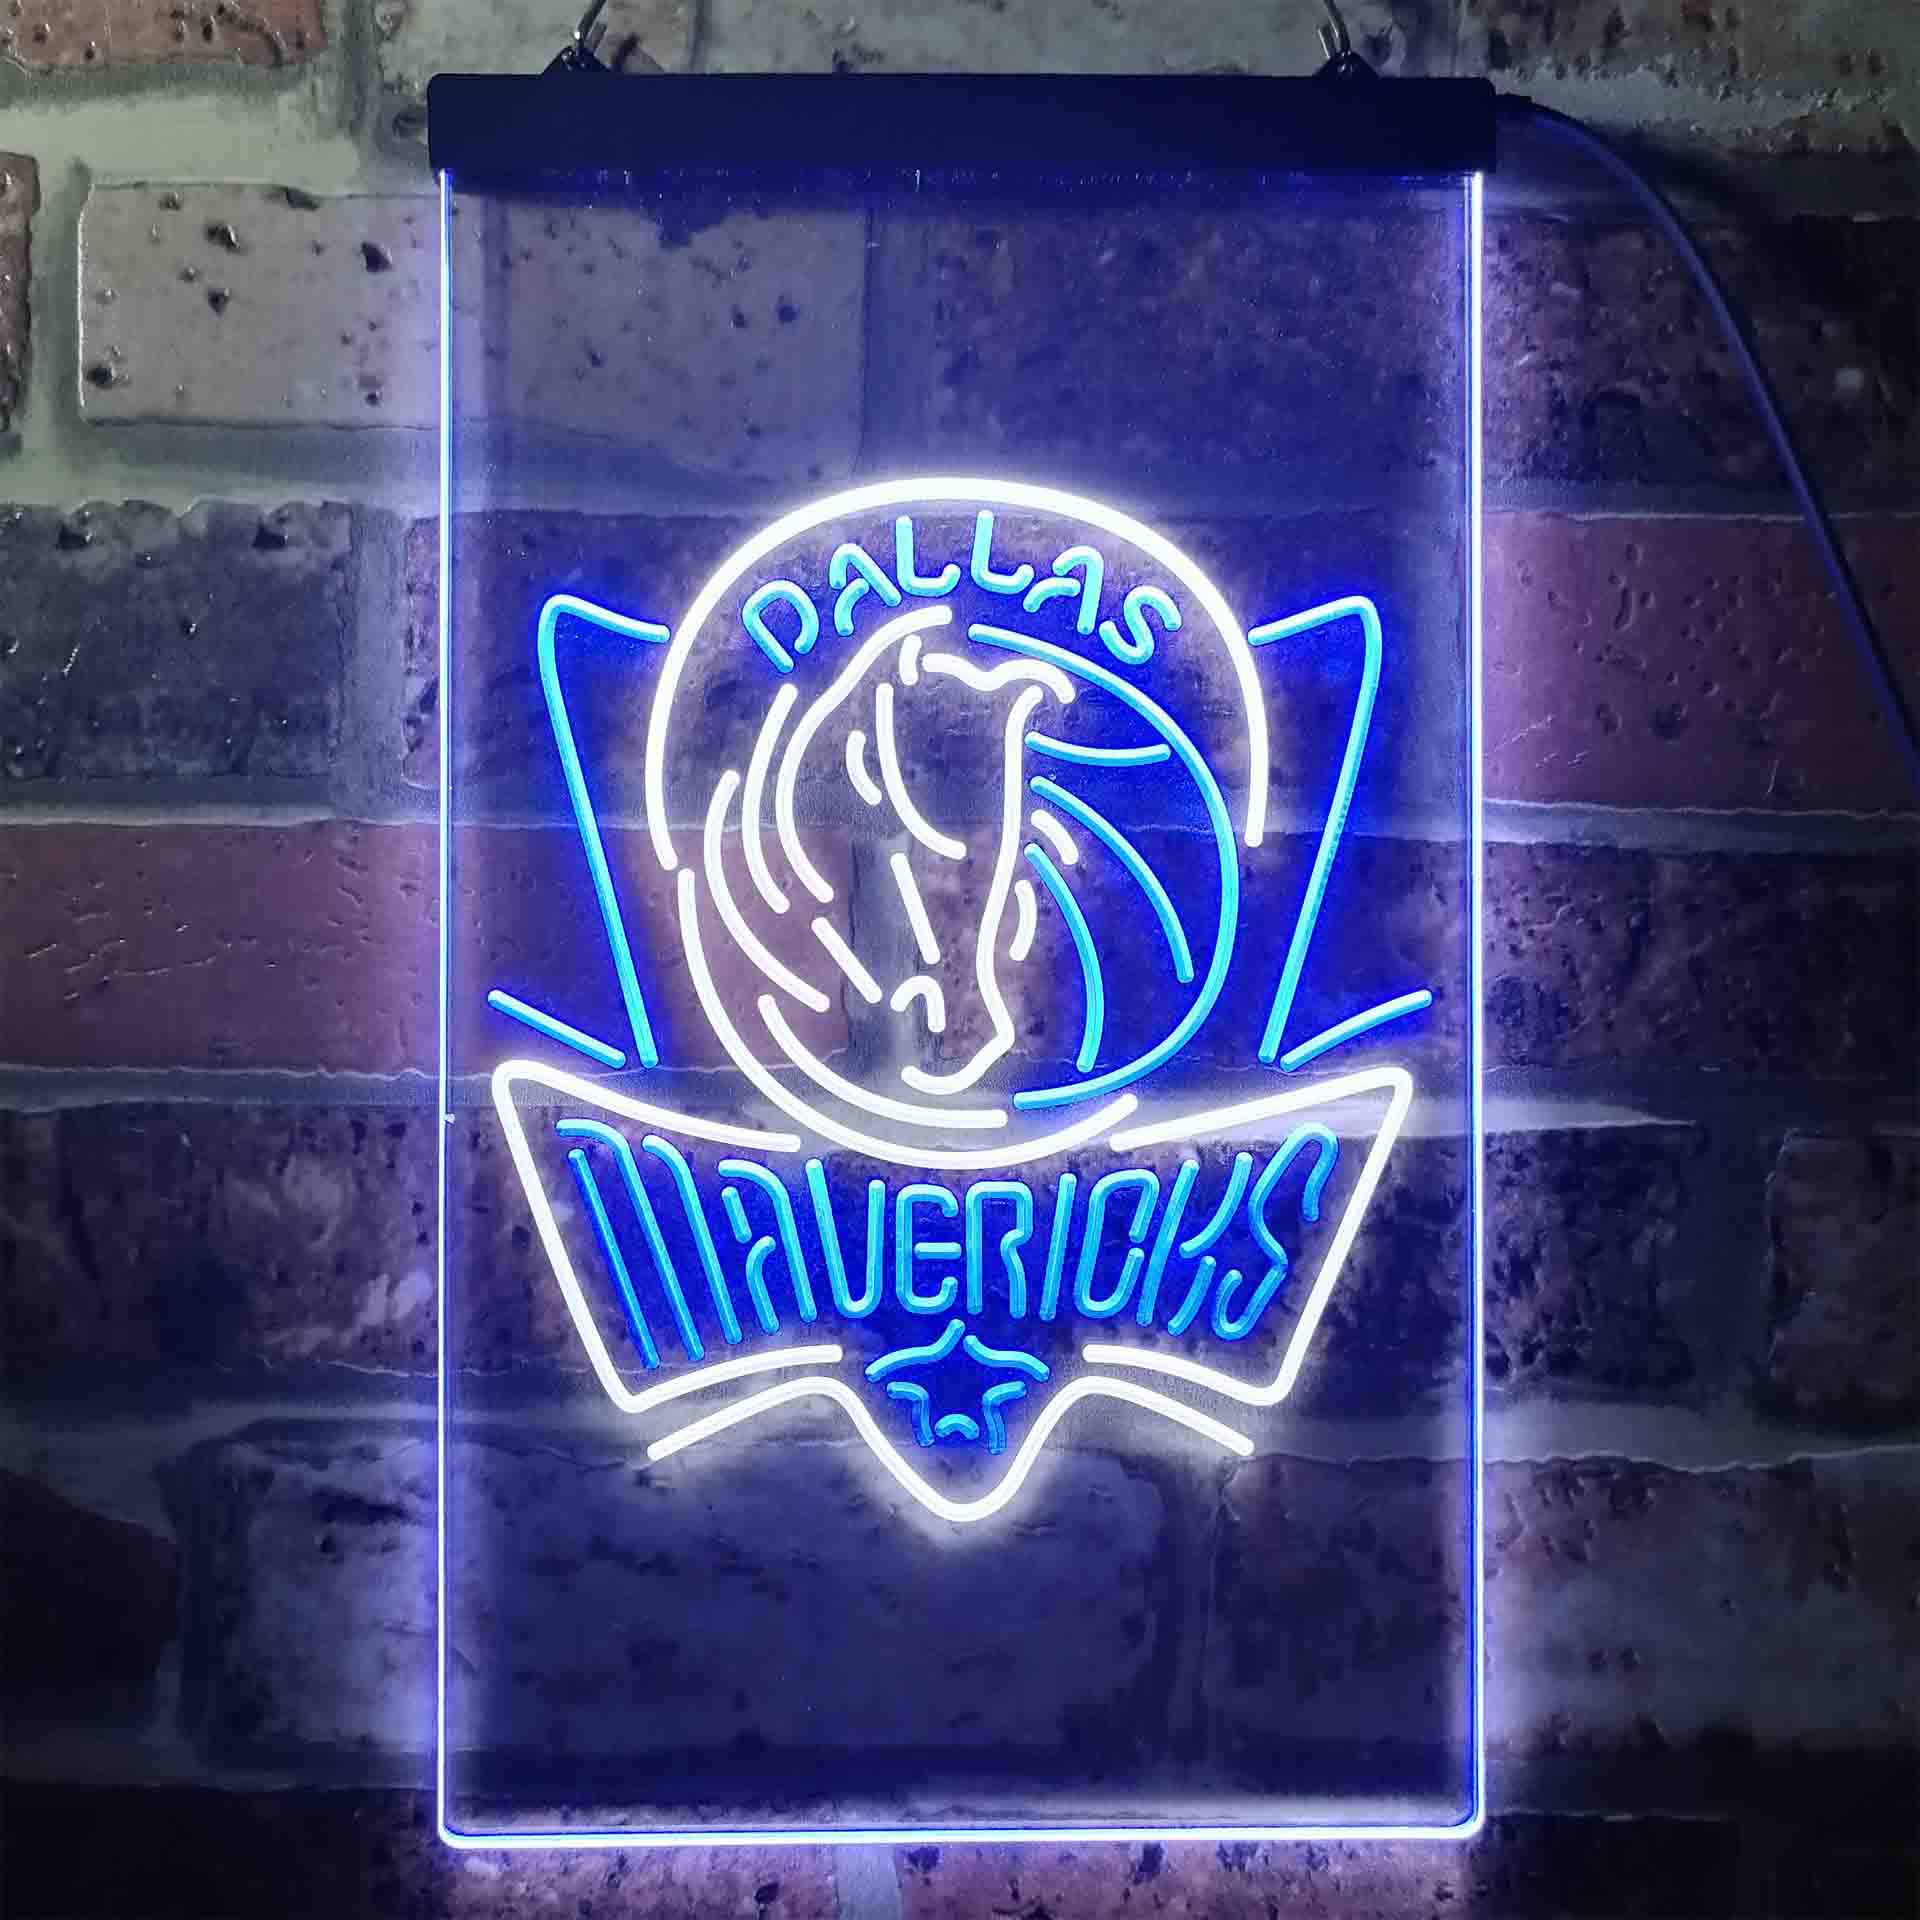 Mavericks Pub Club League Group Man Cave Neon Sign